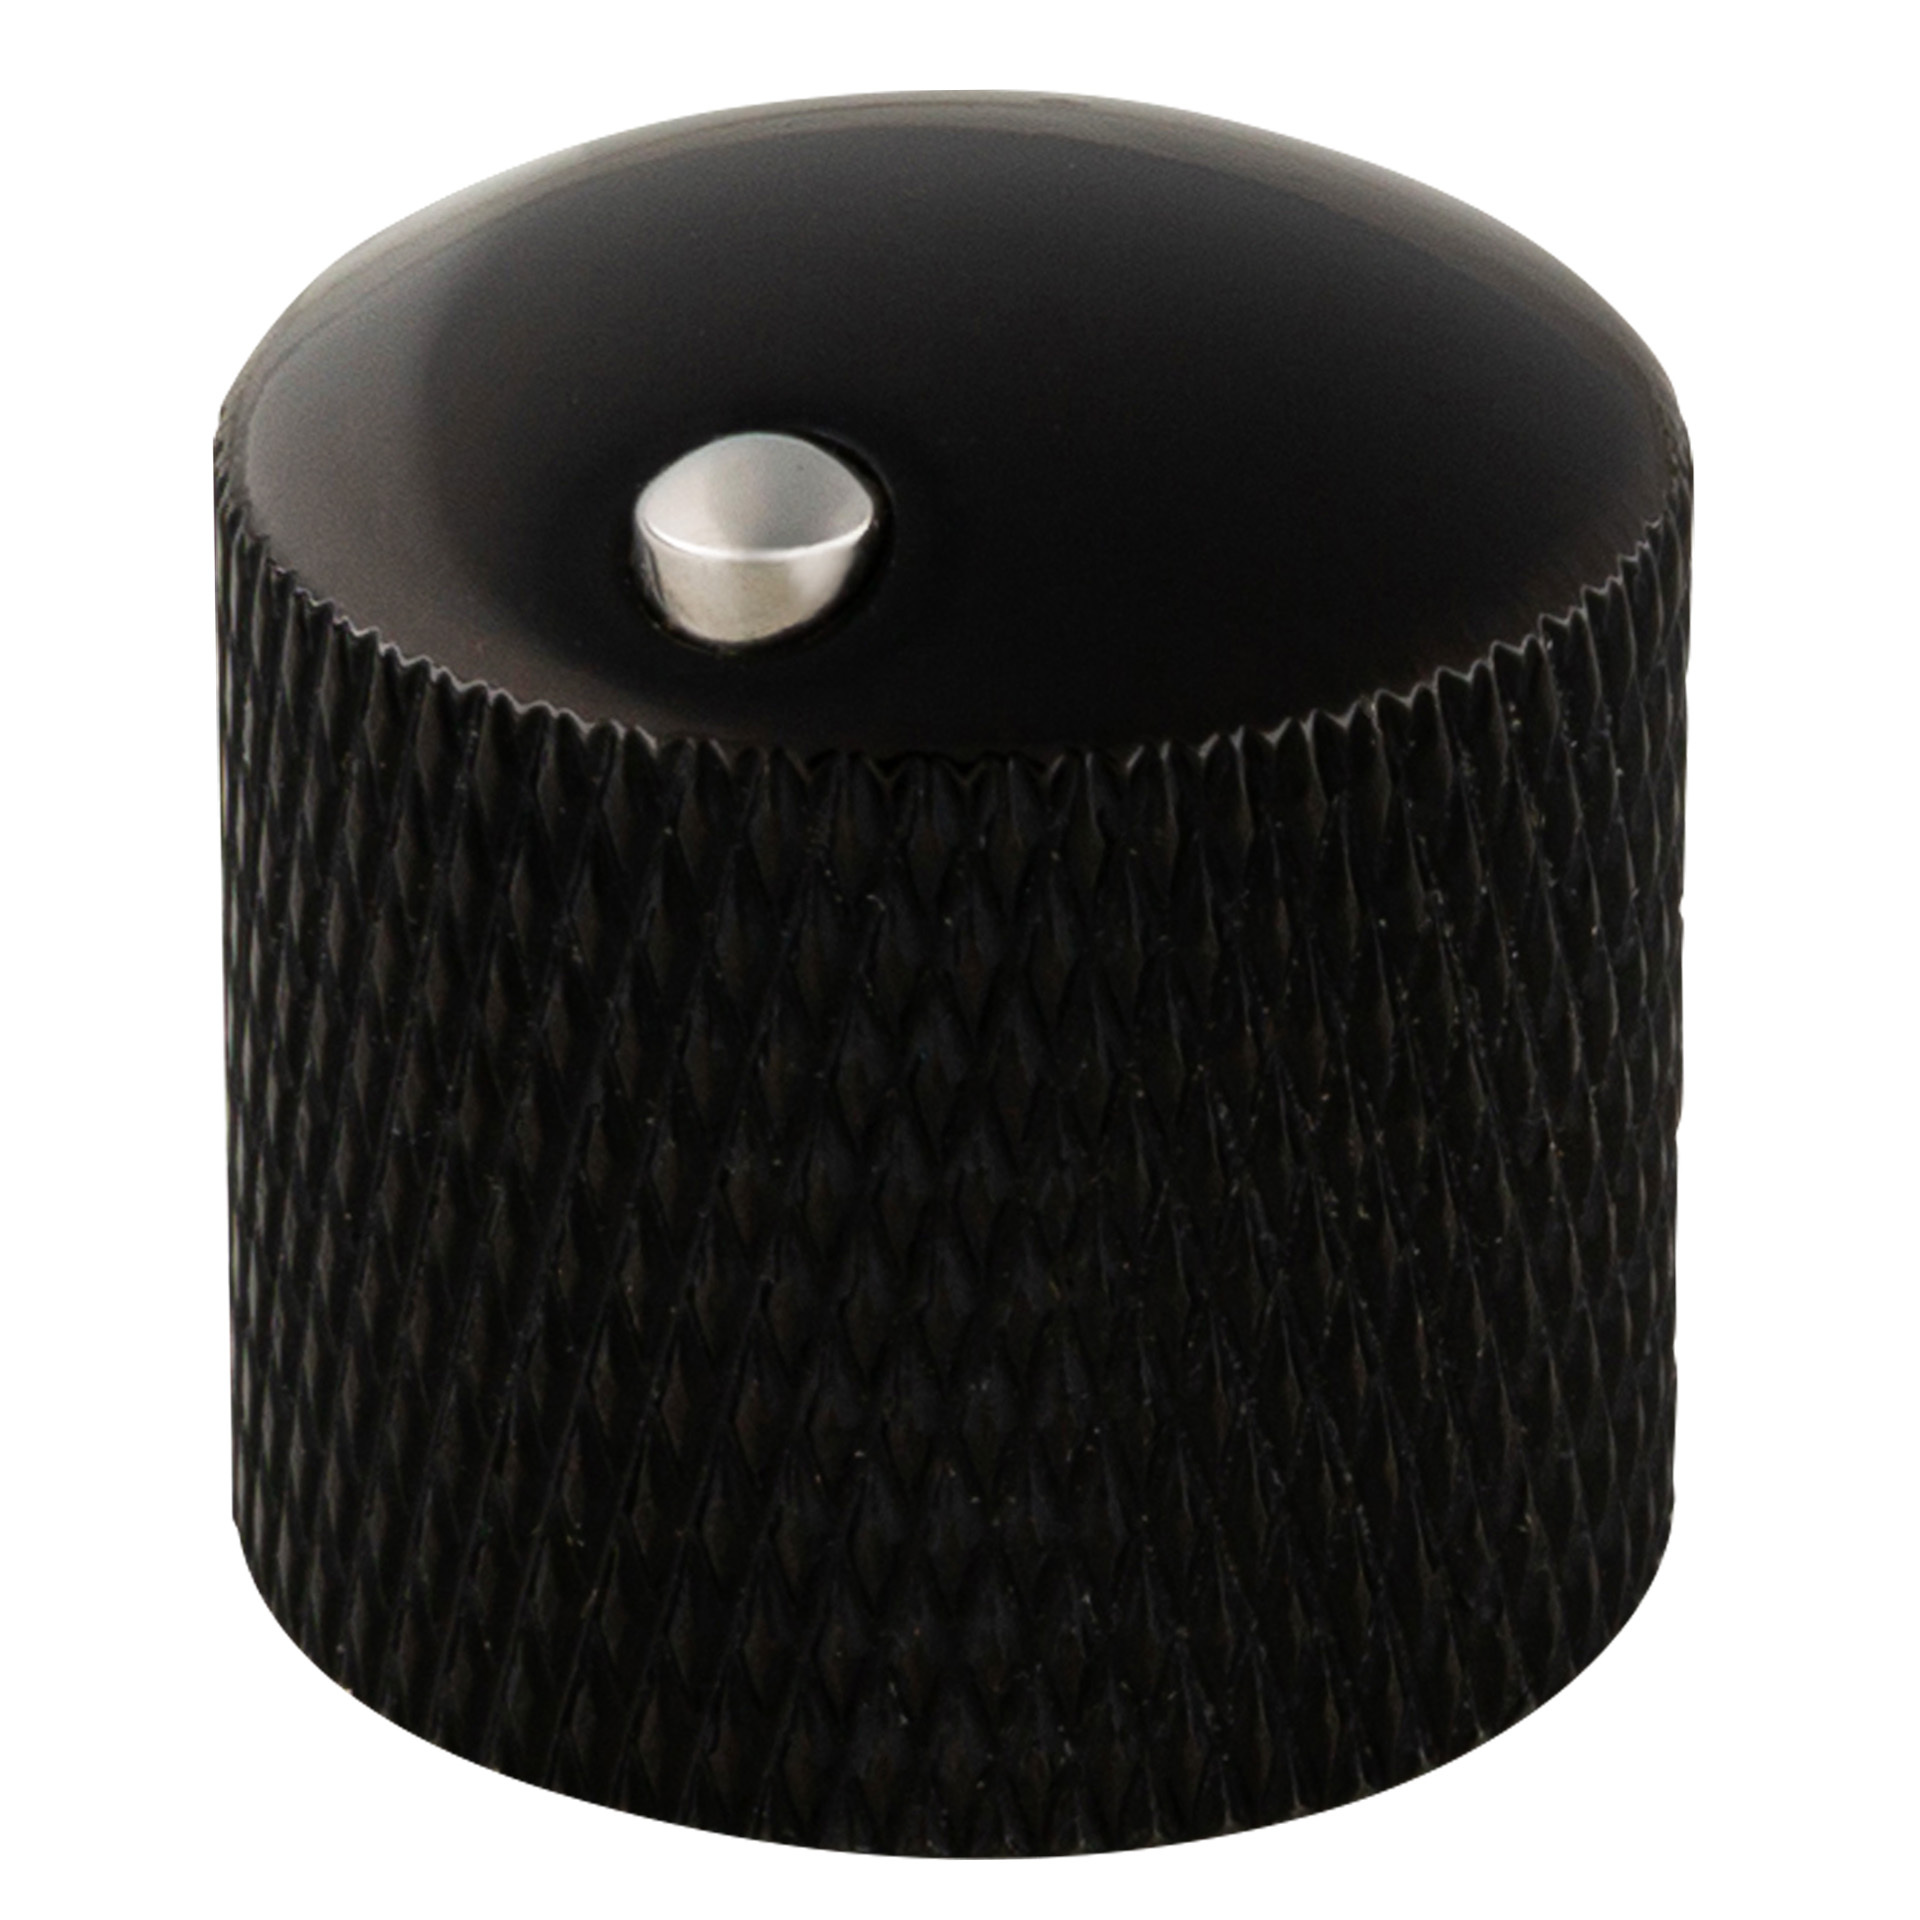 Framus & Warwick Parts - Potentiometer Dome Knob with Convex Indicator - Black